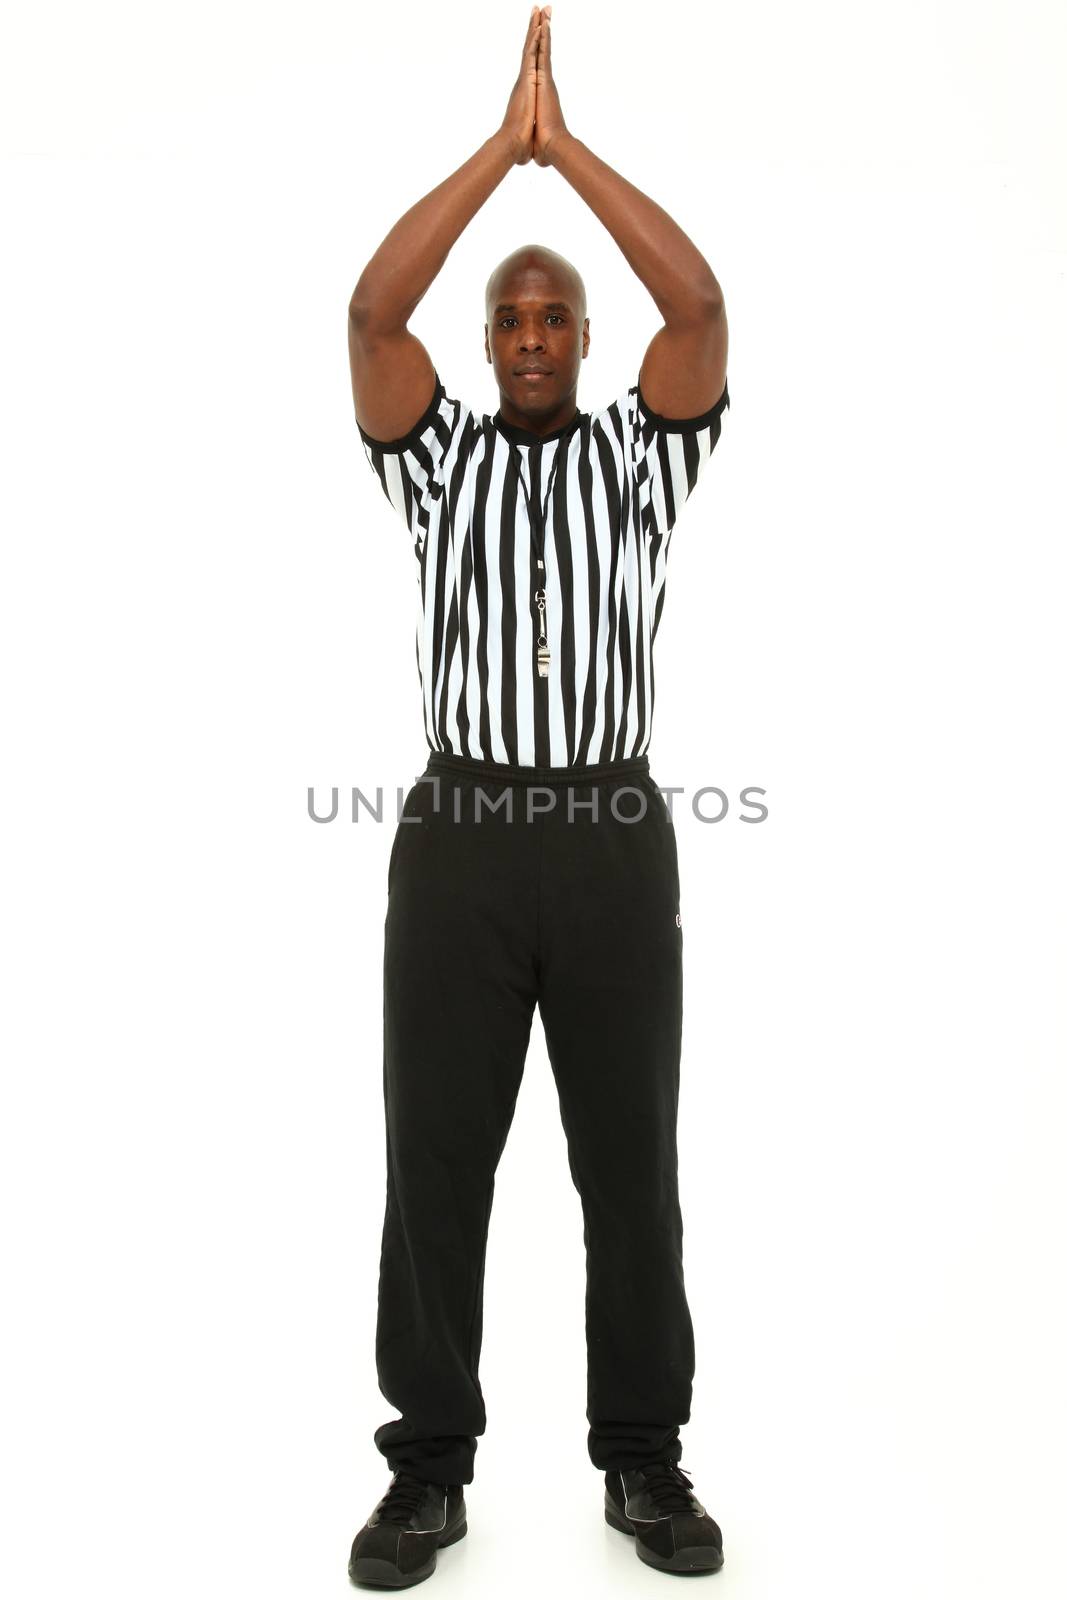 Attractive fit black man in referee uniform over white.